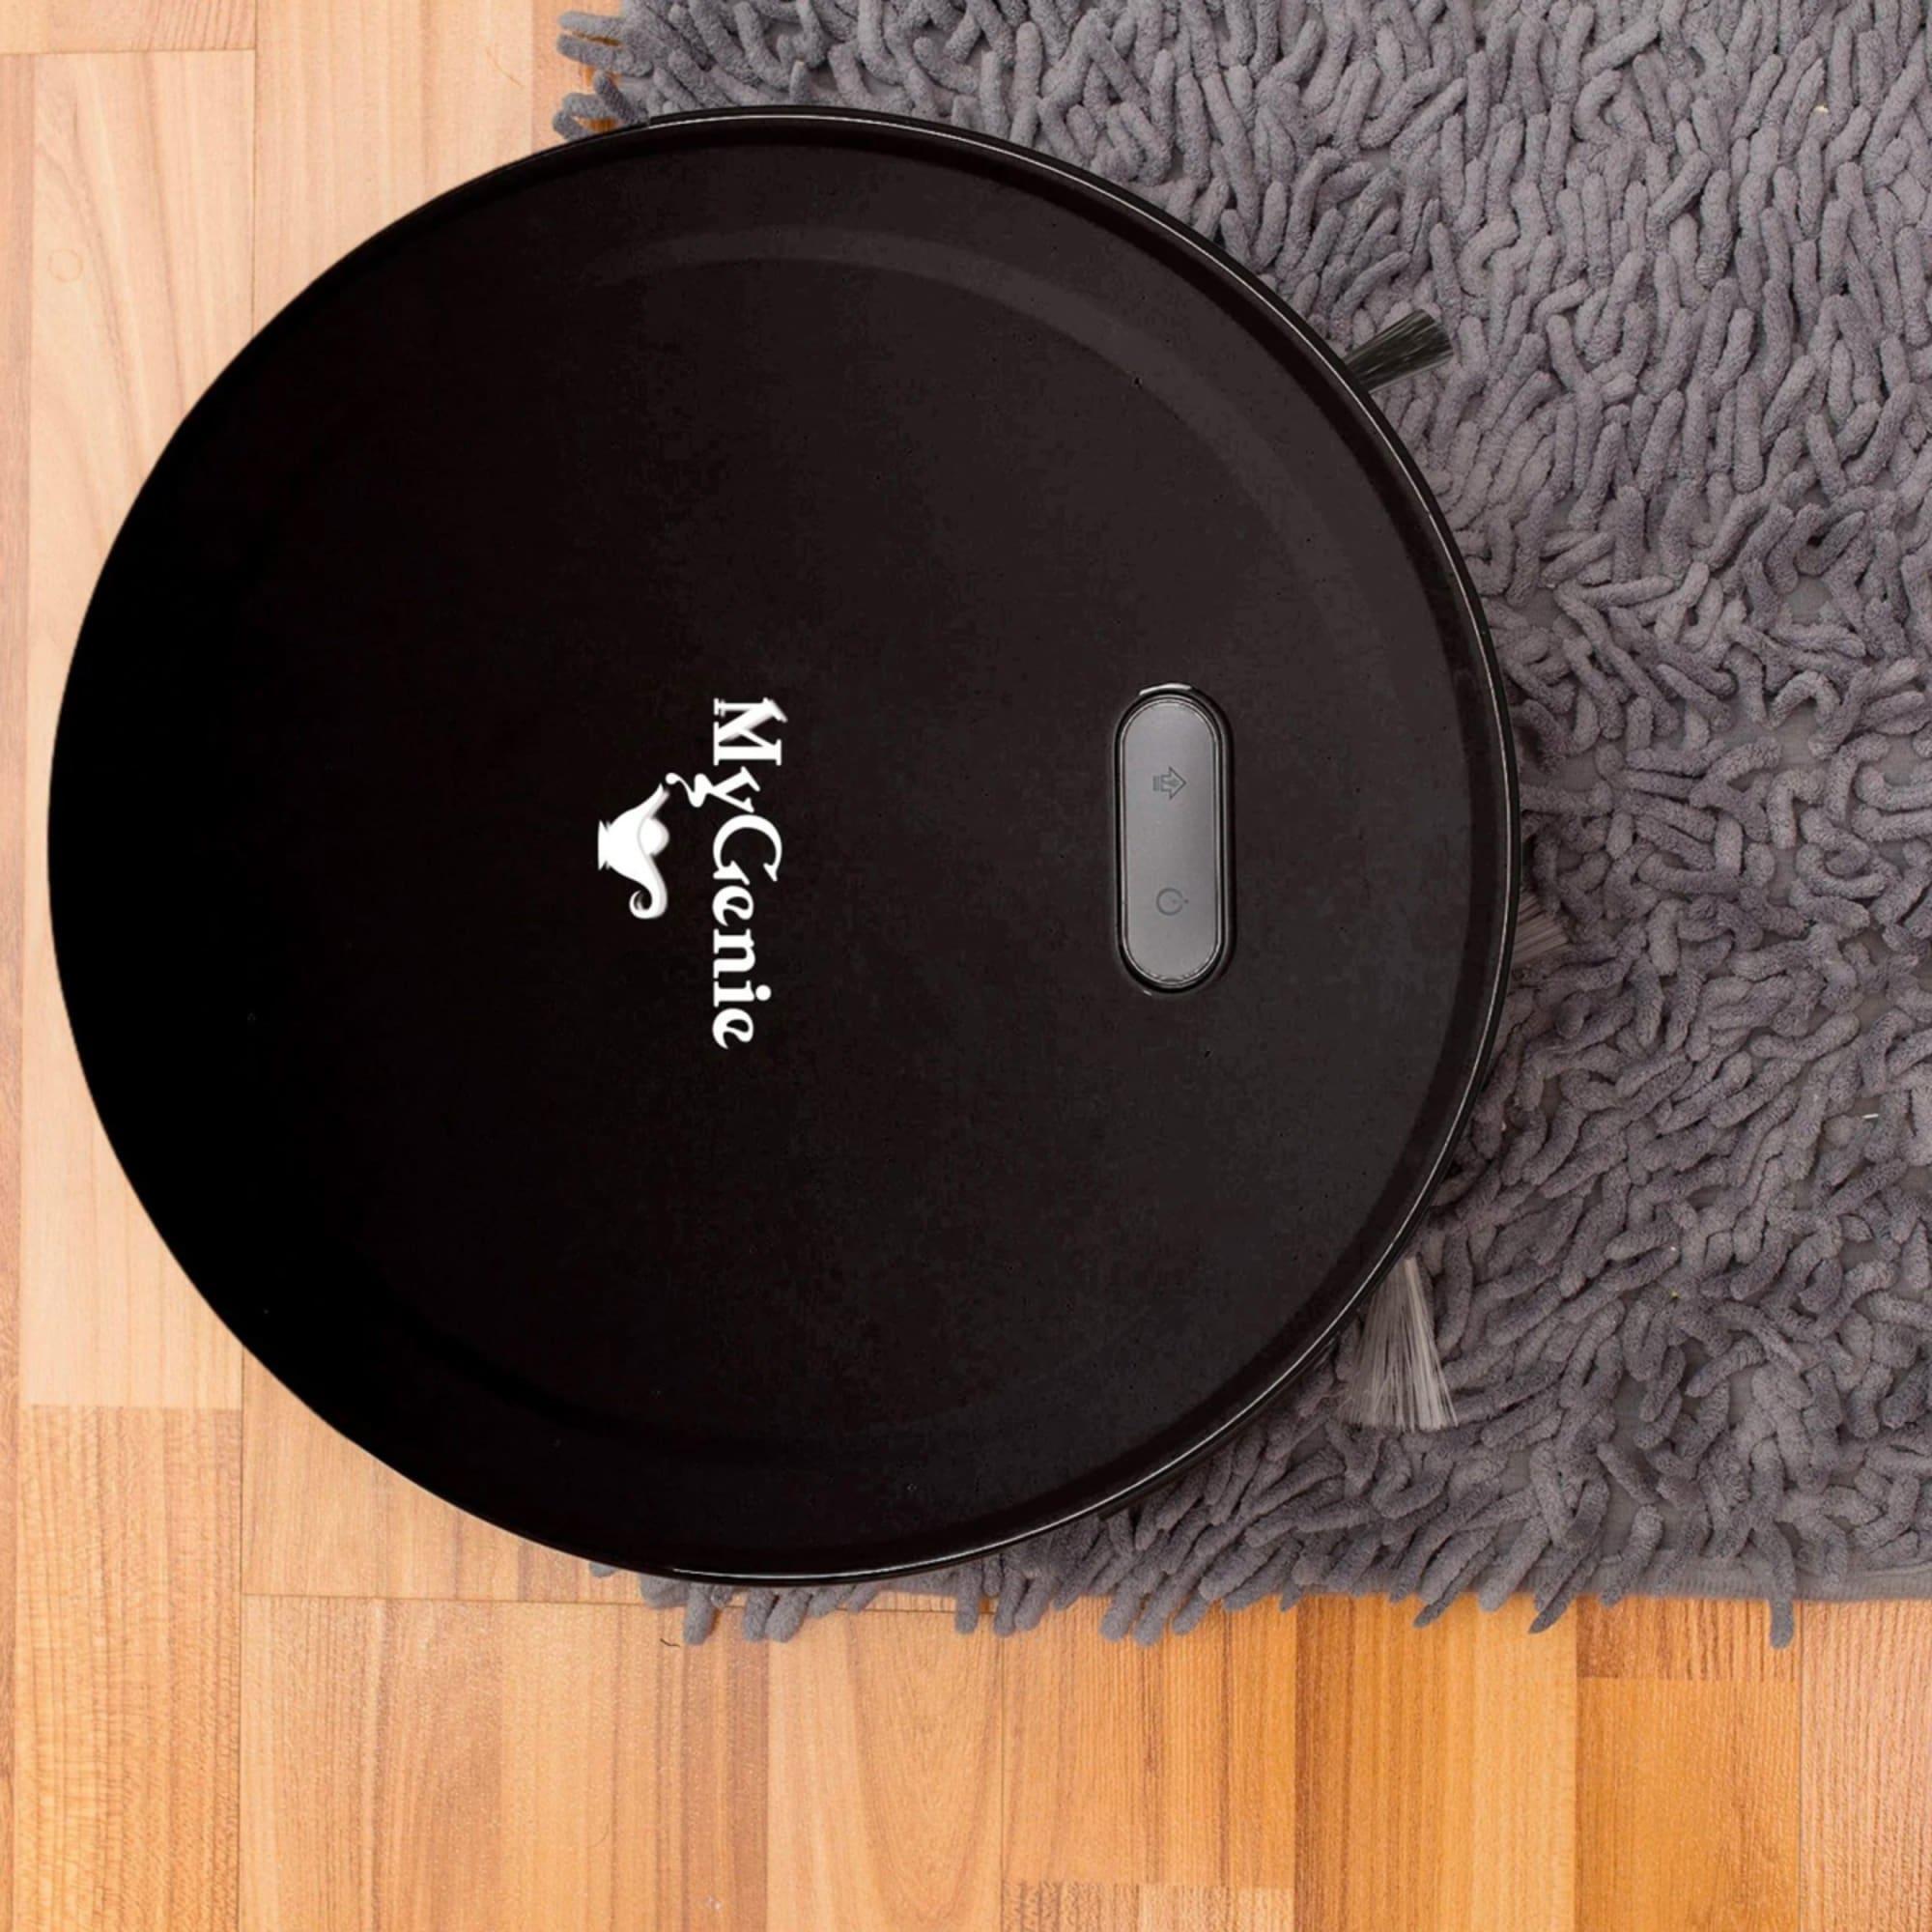 MyGenie Smart Robotic Vacuum Cleaner Black Image 5